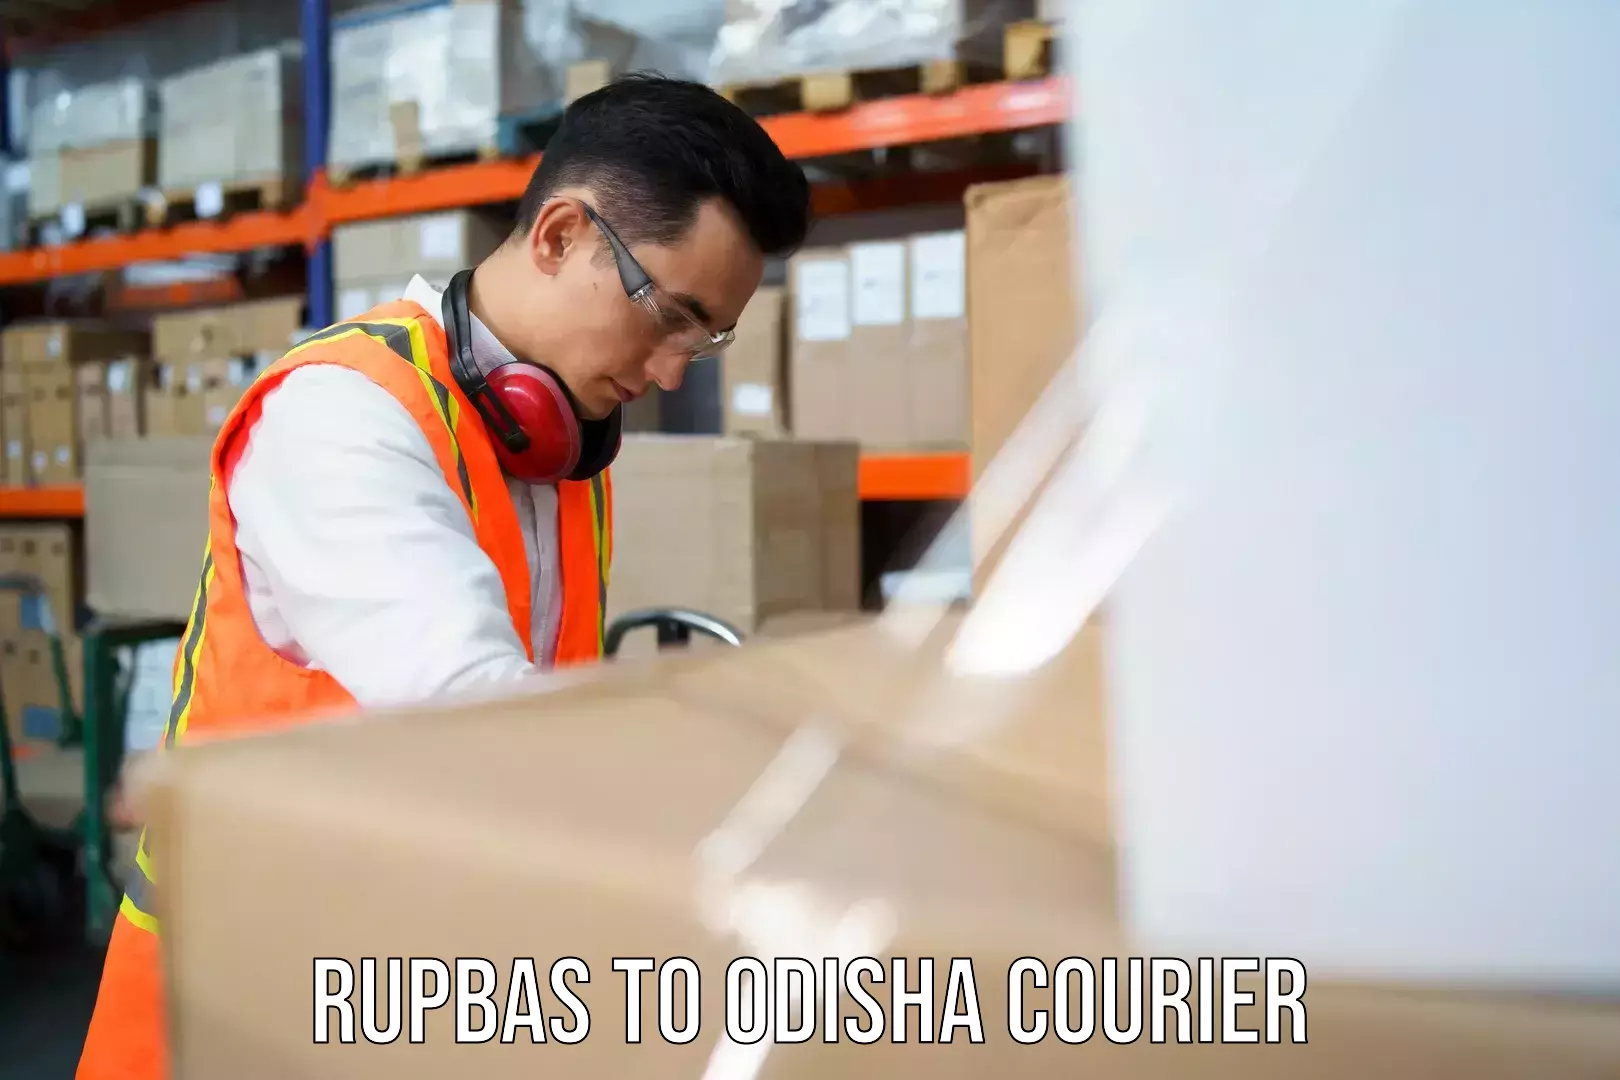 Courier service comparison Rupbas to Bhadrak